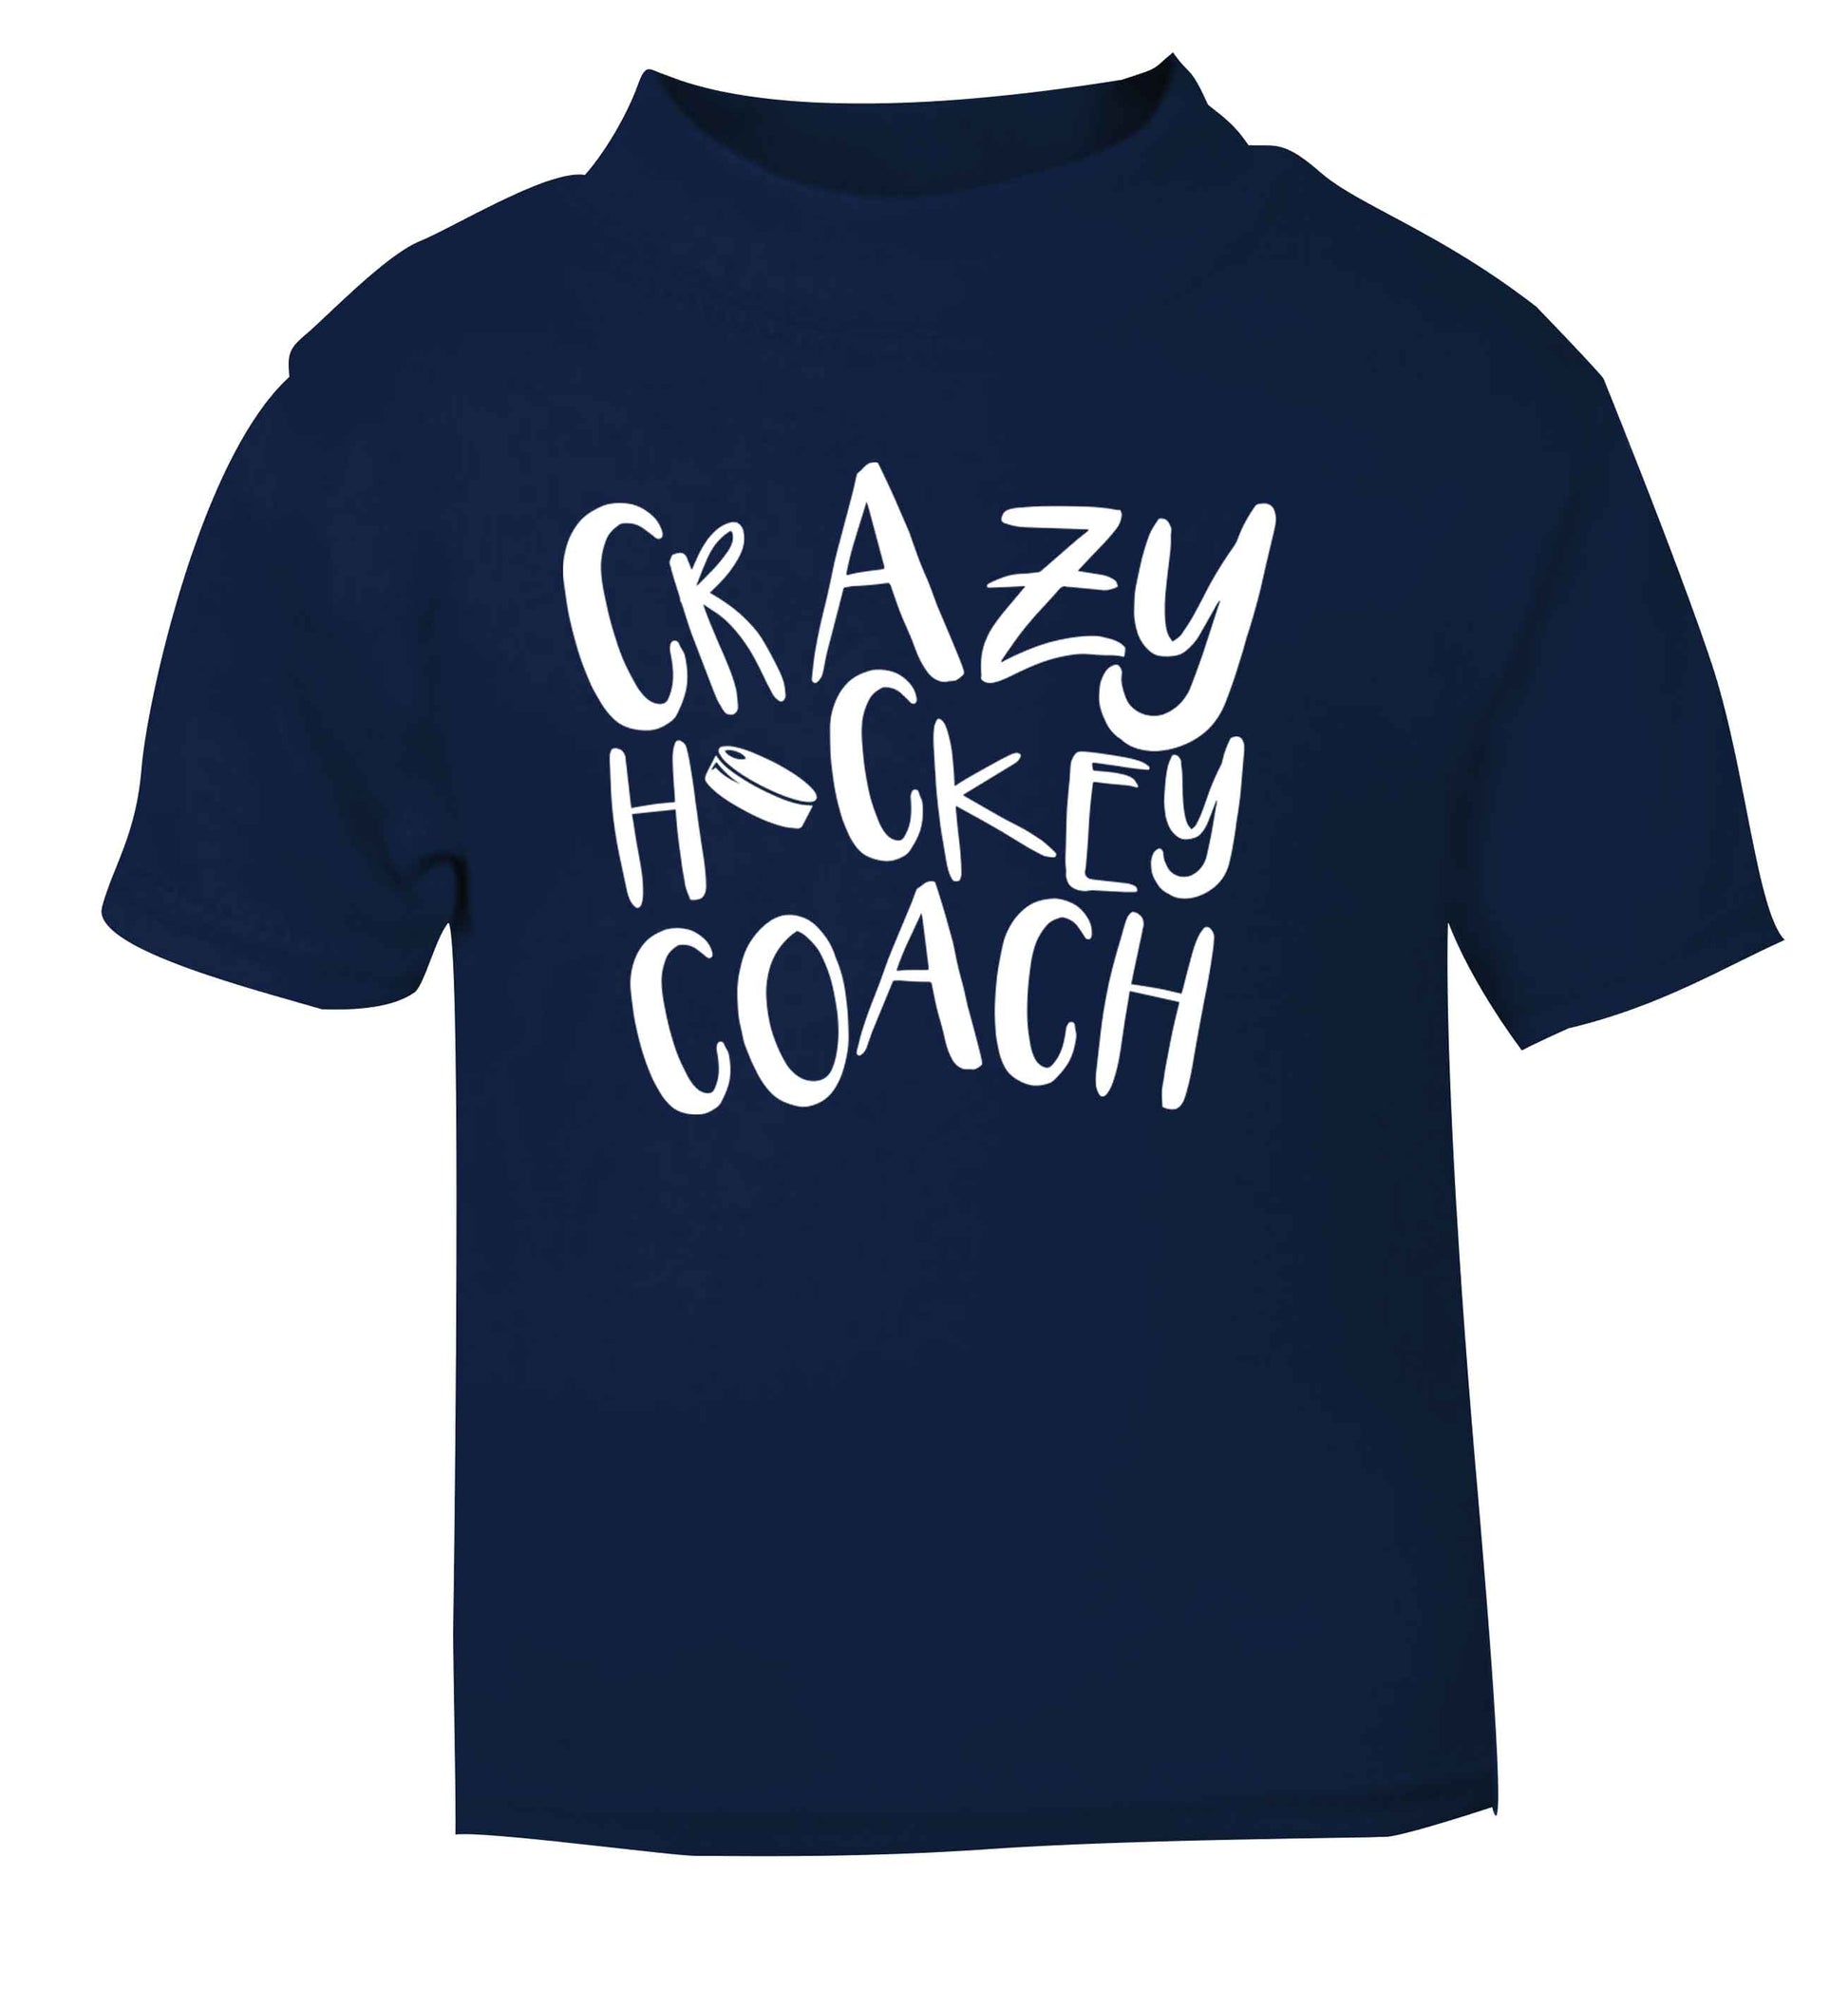 Crazy hockey coach navy Baby Toddler Tshirt 2 Years